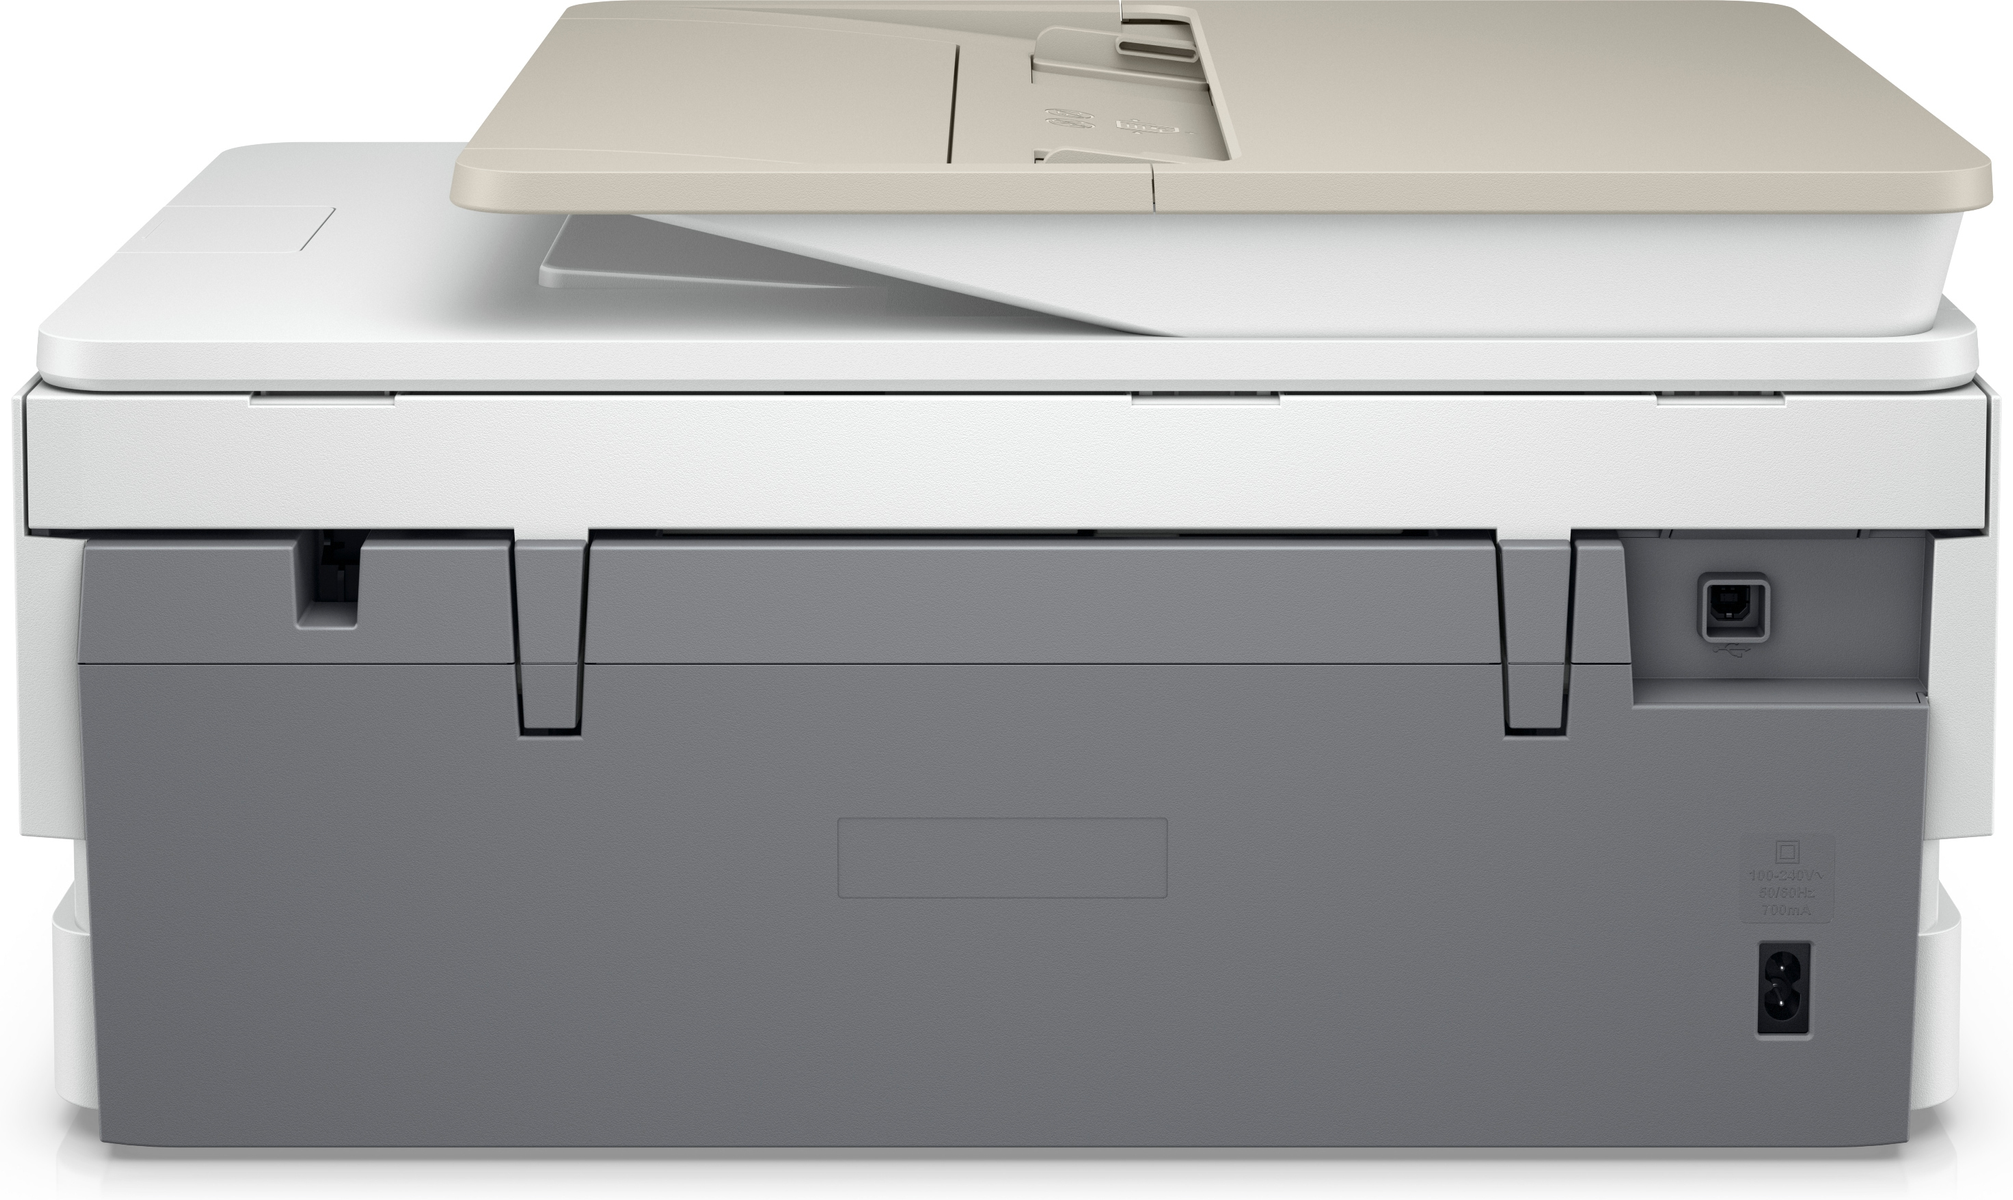 HP ENVY INSPIRE 7920E AIL-IN-ONE Multifunktionsdrucker Thermal Inkjet WLAN PRINTER